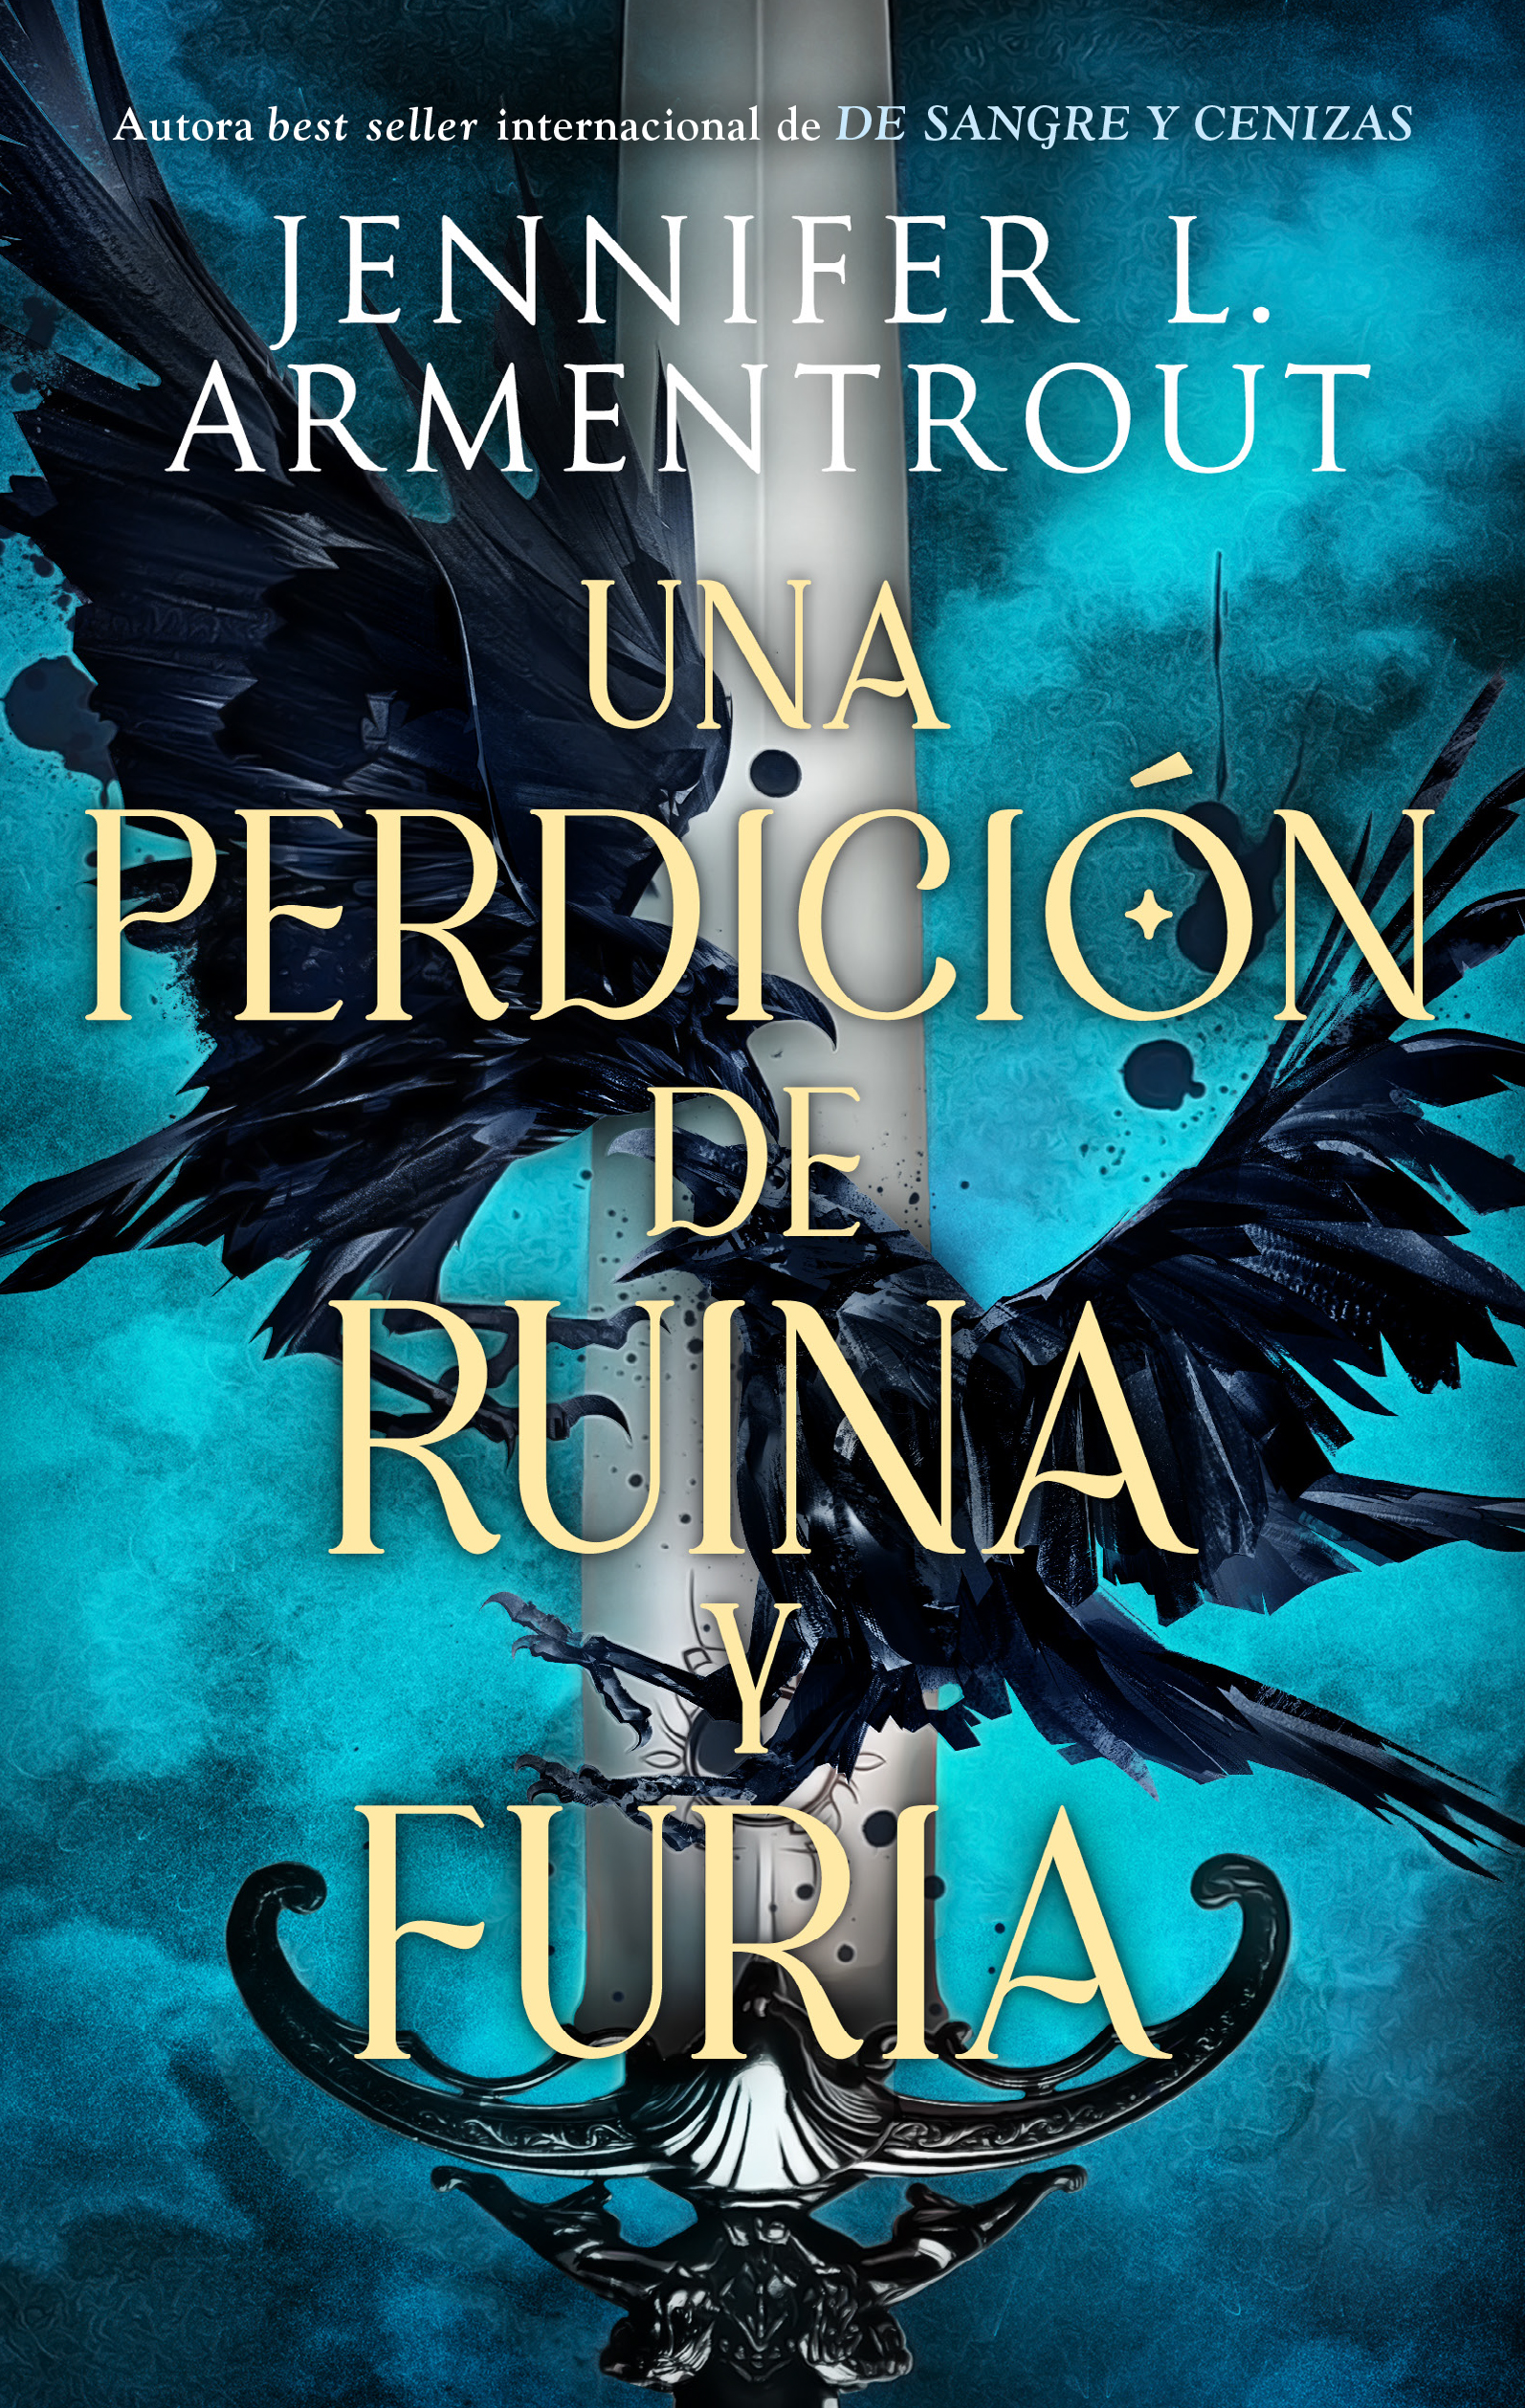  Una luz en la llama (Spanish Edition) eBook : ARMENTROUT,  JENNIFER: Kindle Store